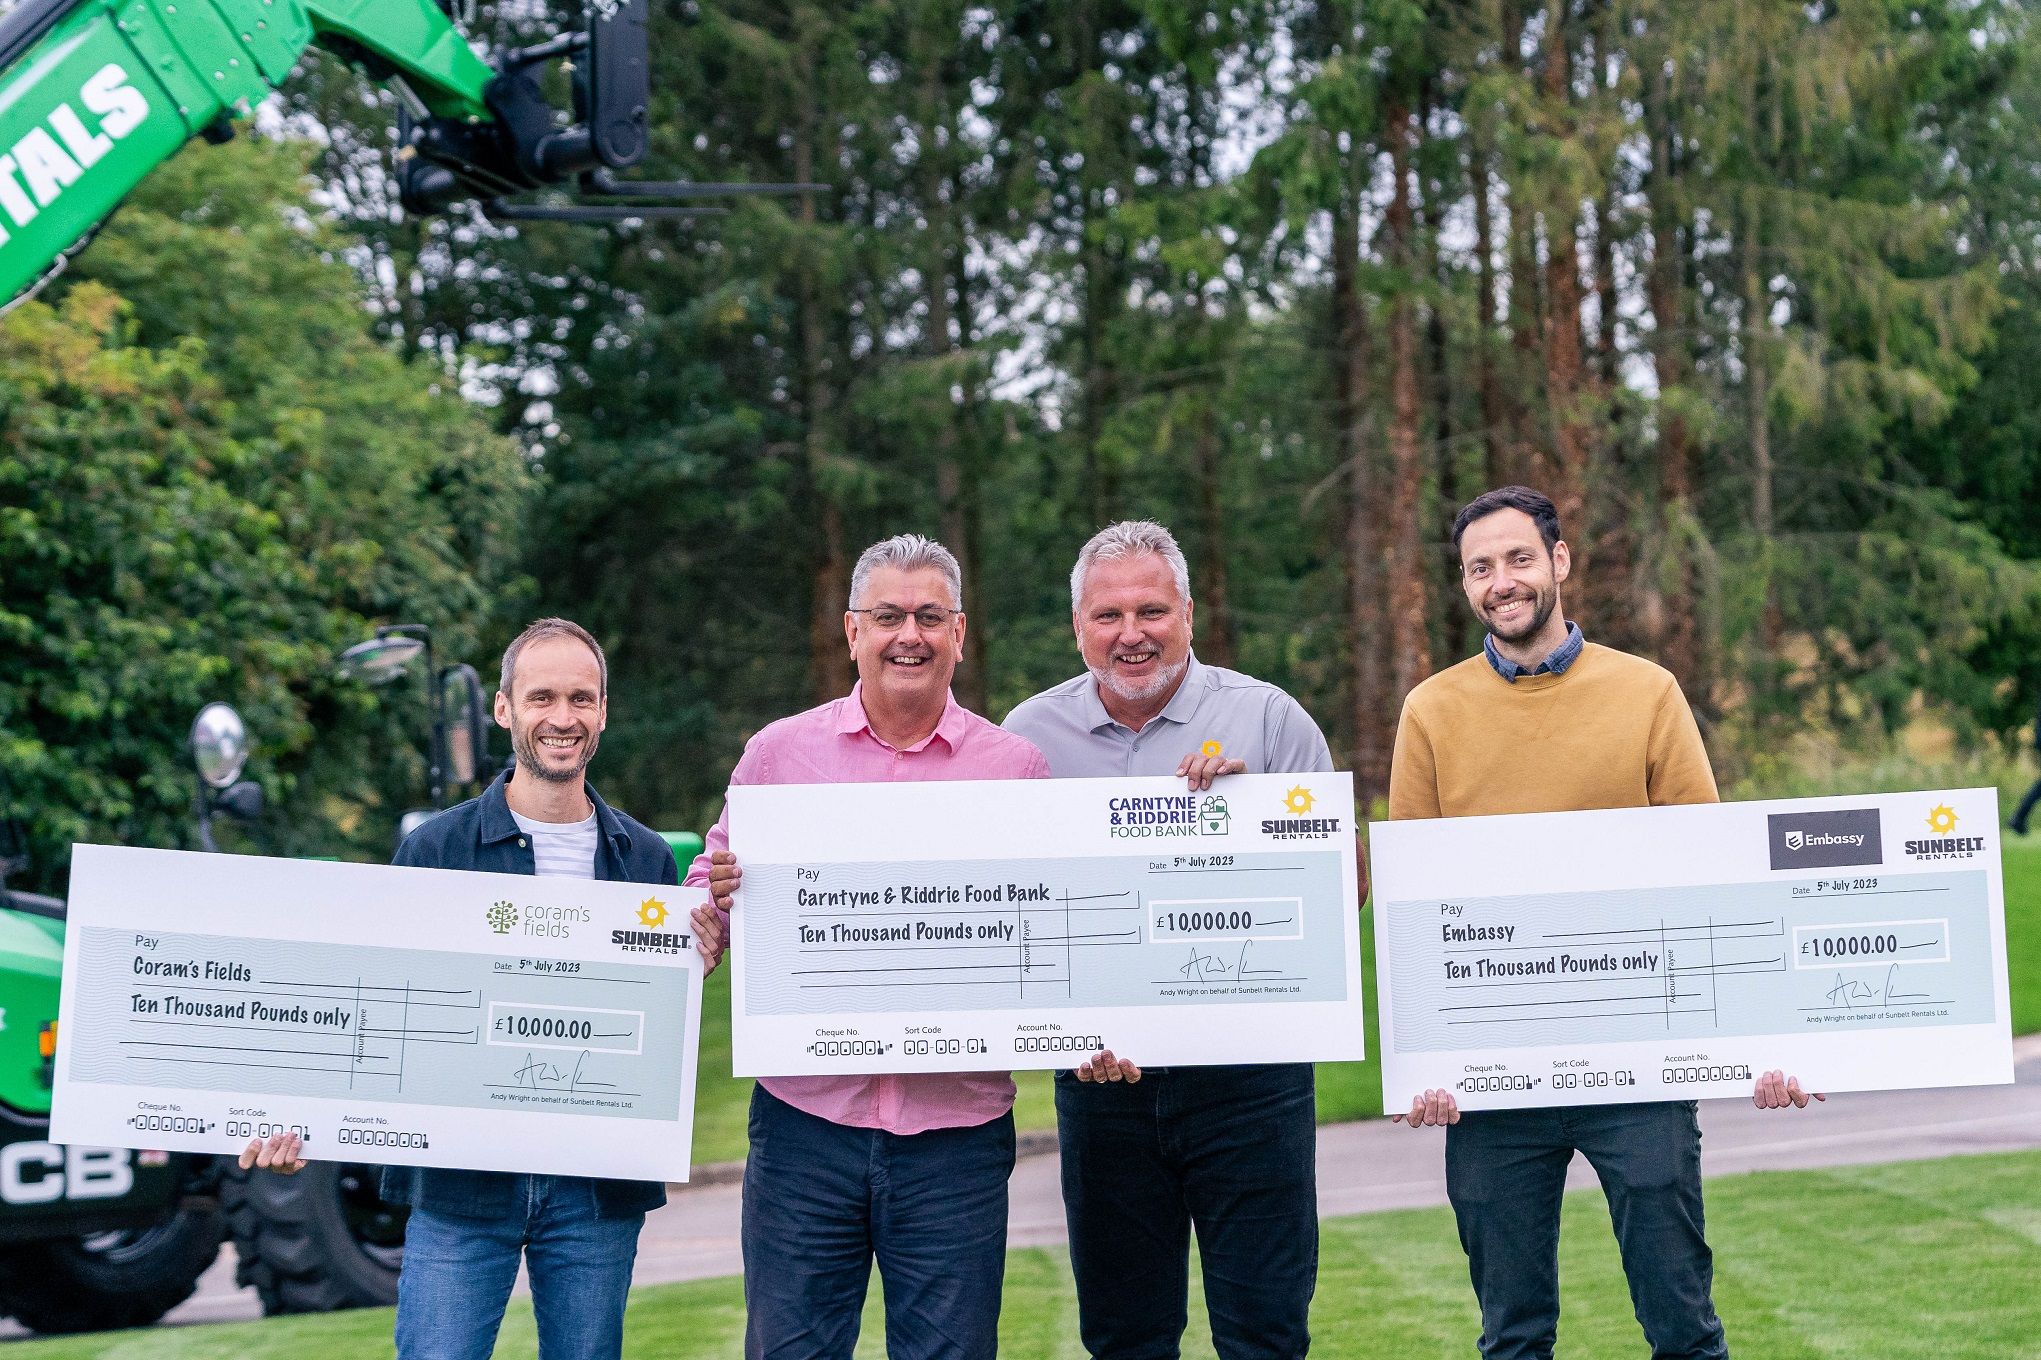 Glasgow charity helped by Sunbelt Rentals golf day